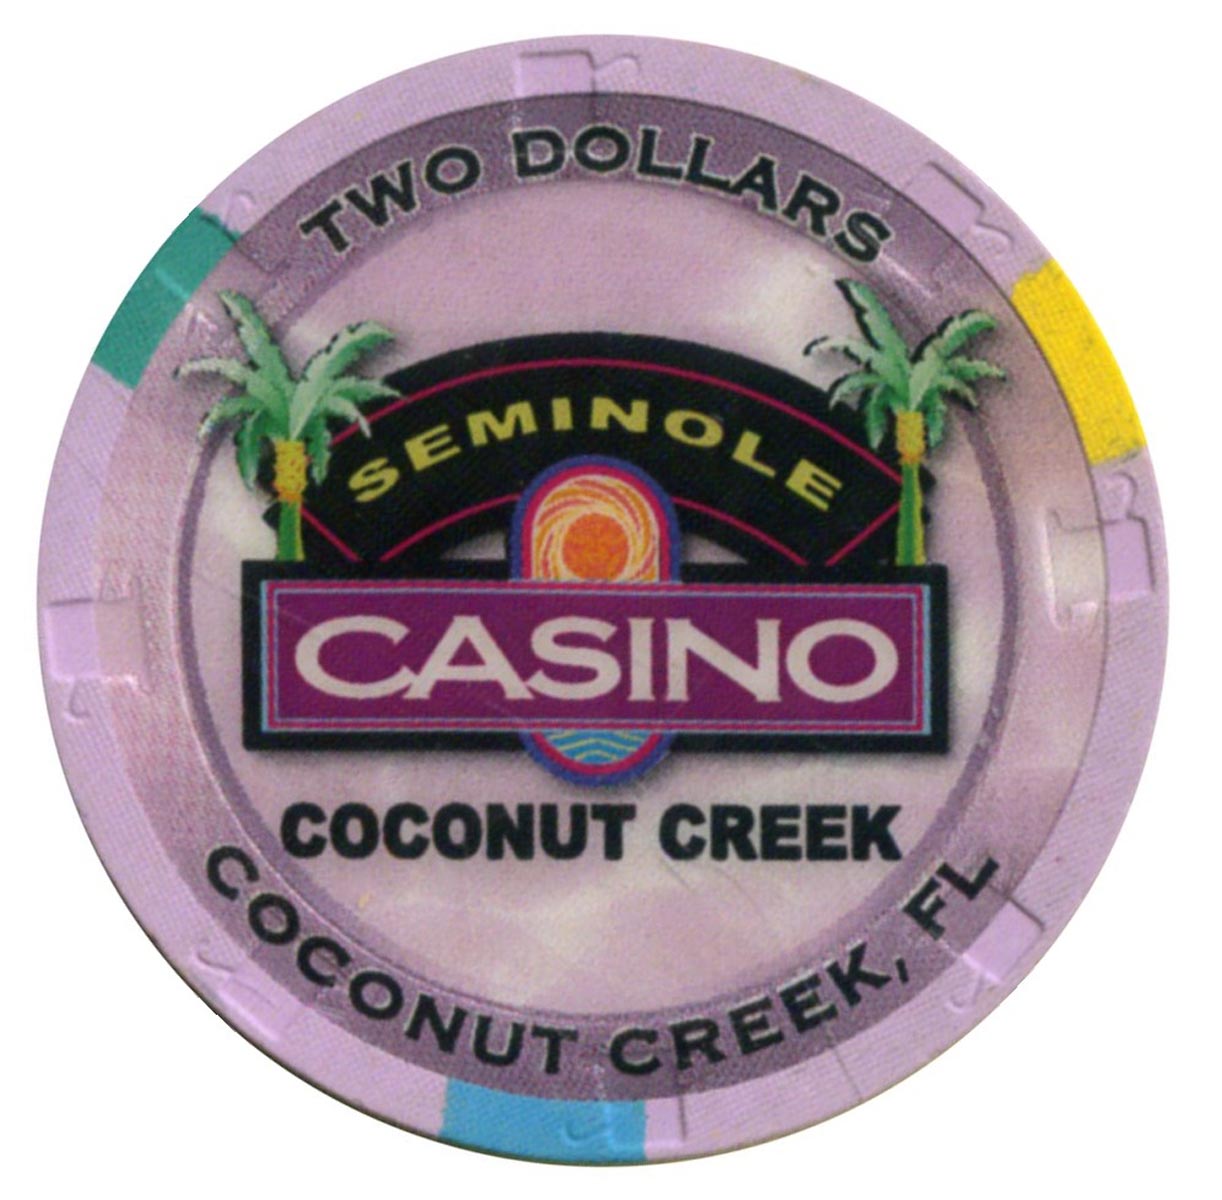 seminole casino coconut creek vip veteran